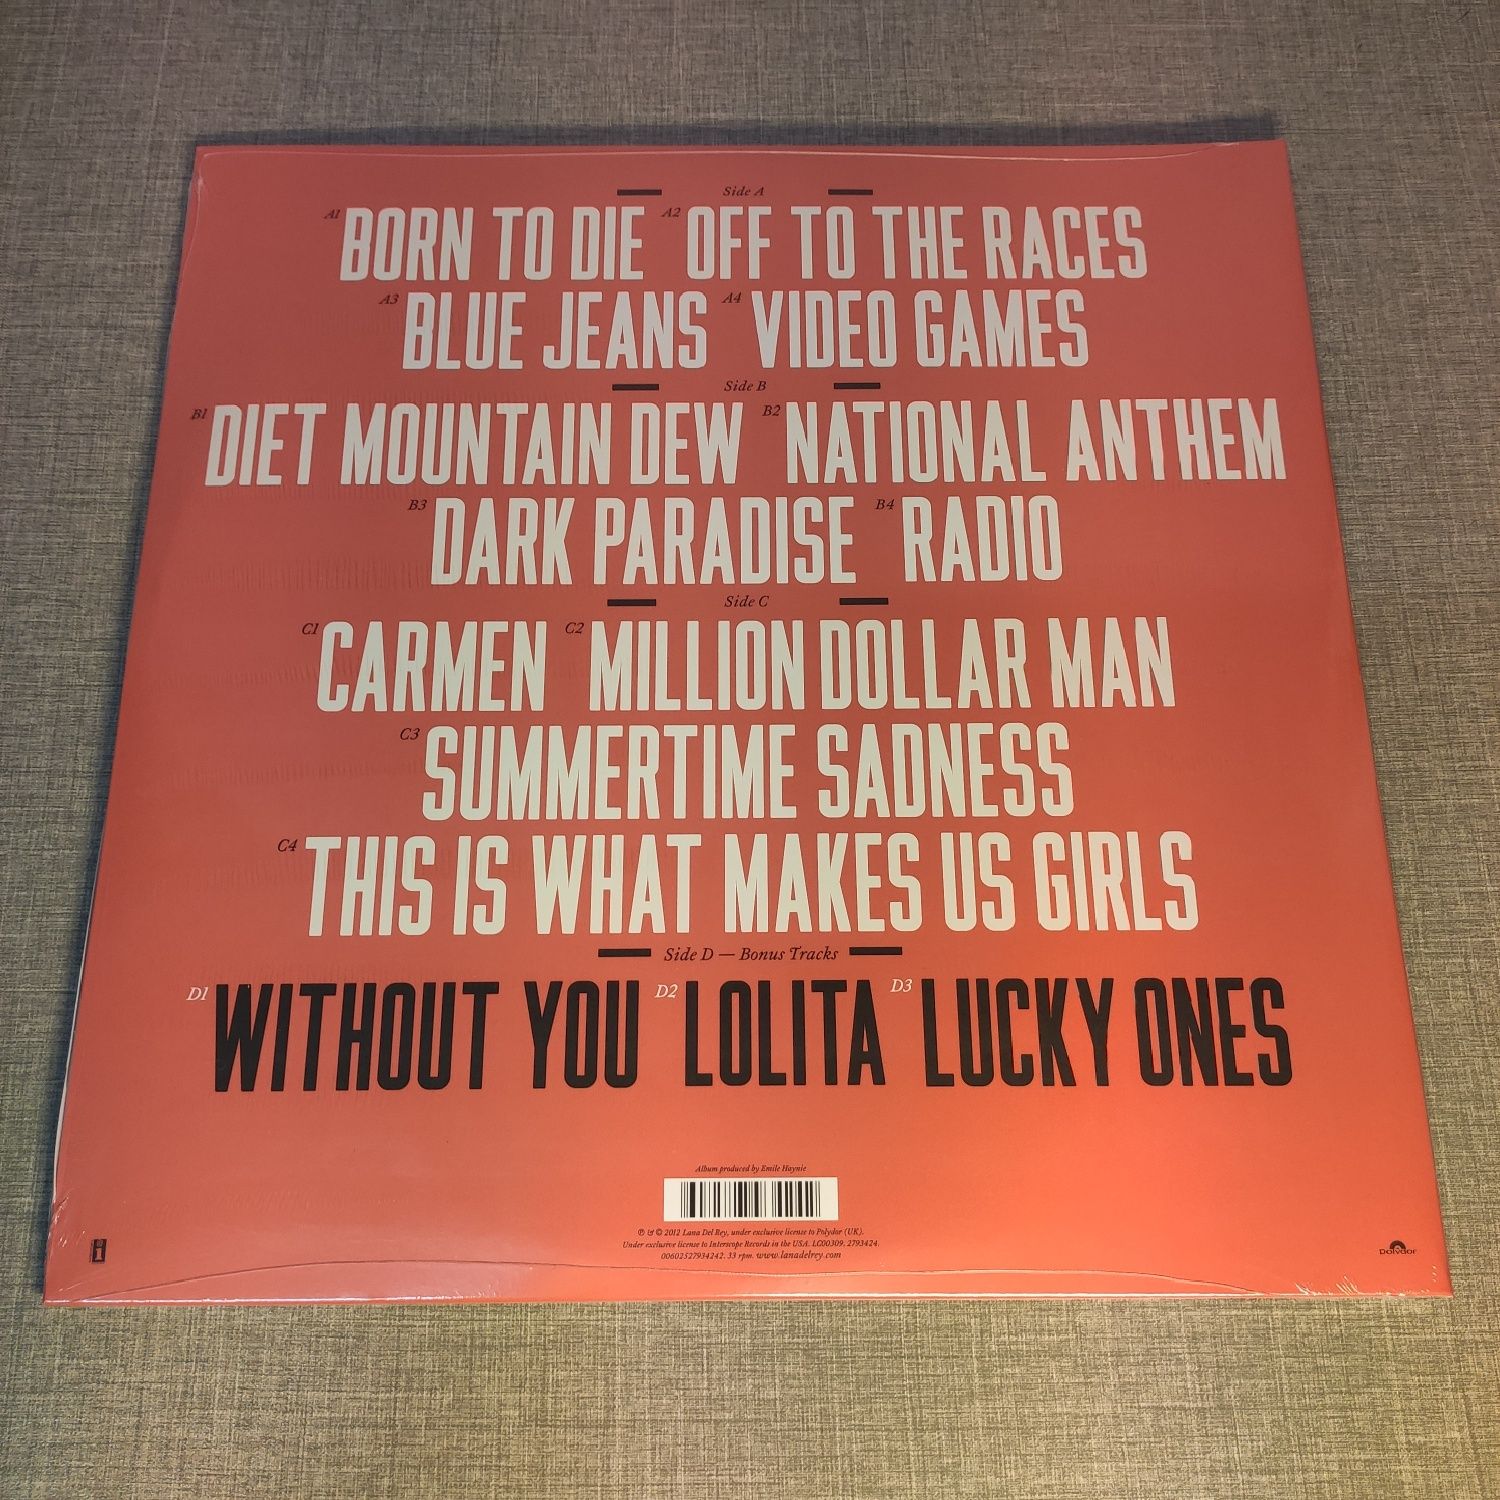 Lana Del Rey : Born To Die 2LP / Винил / VL / Пластинка